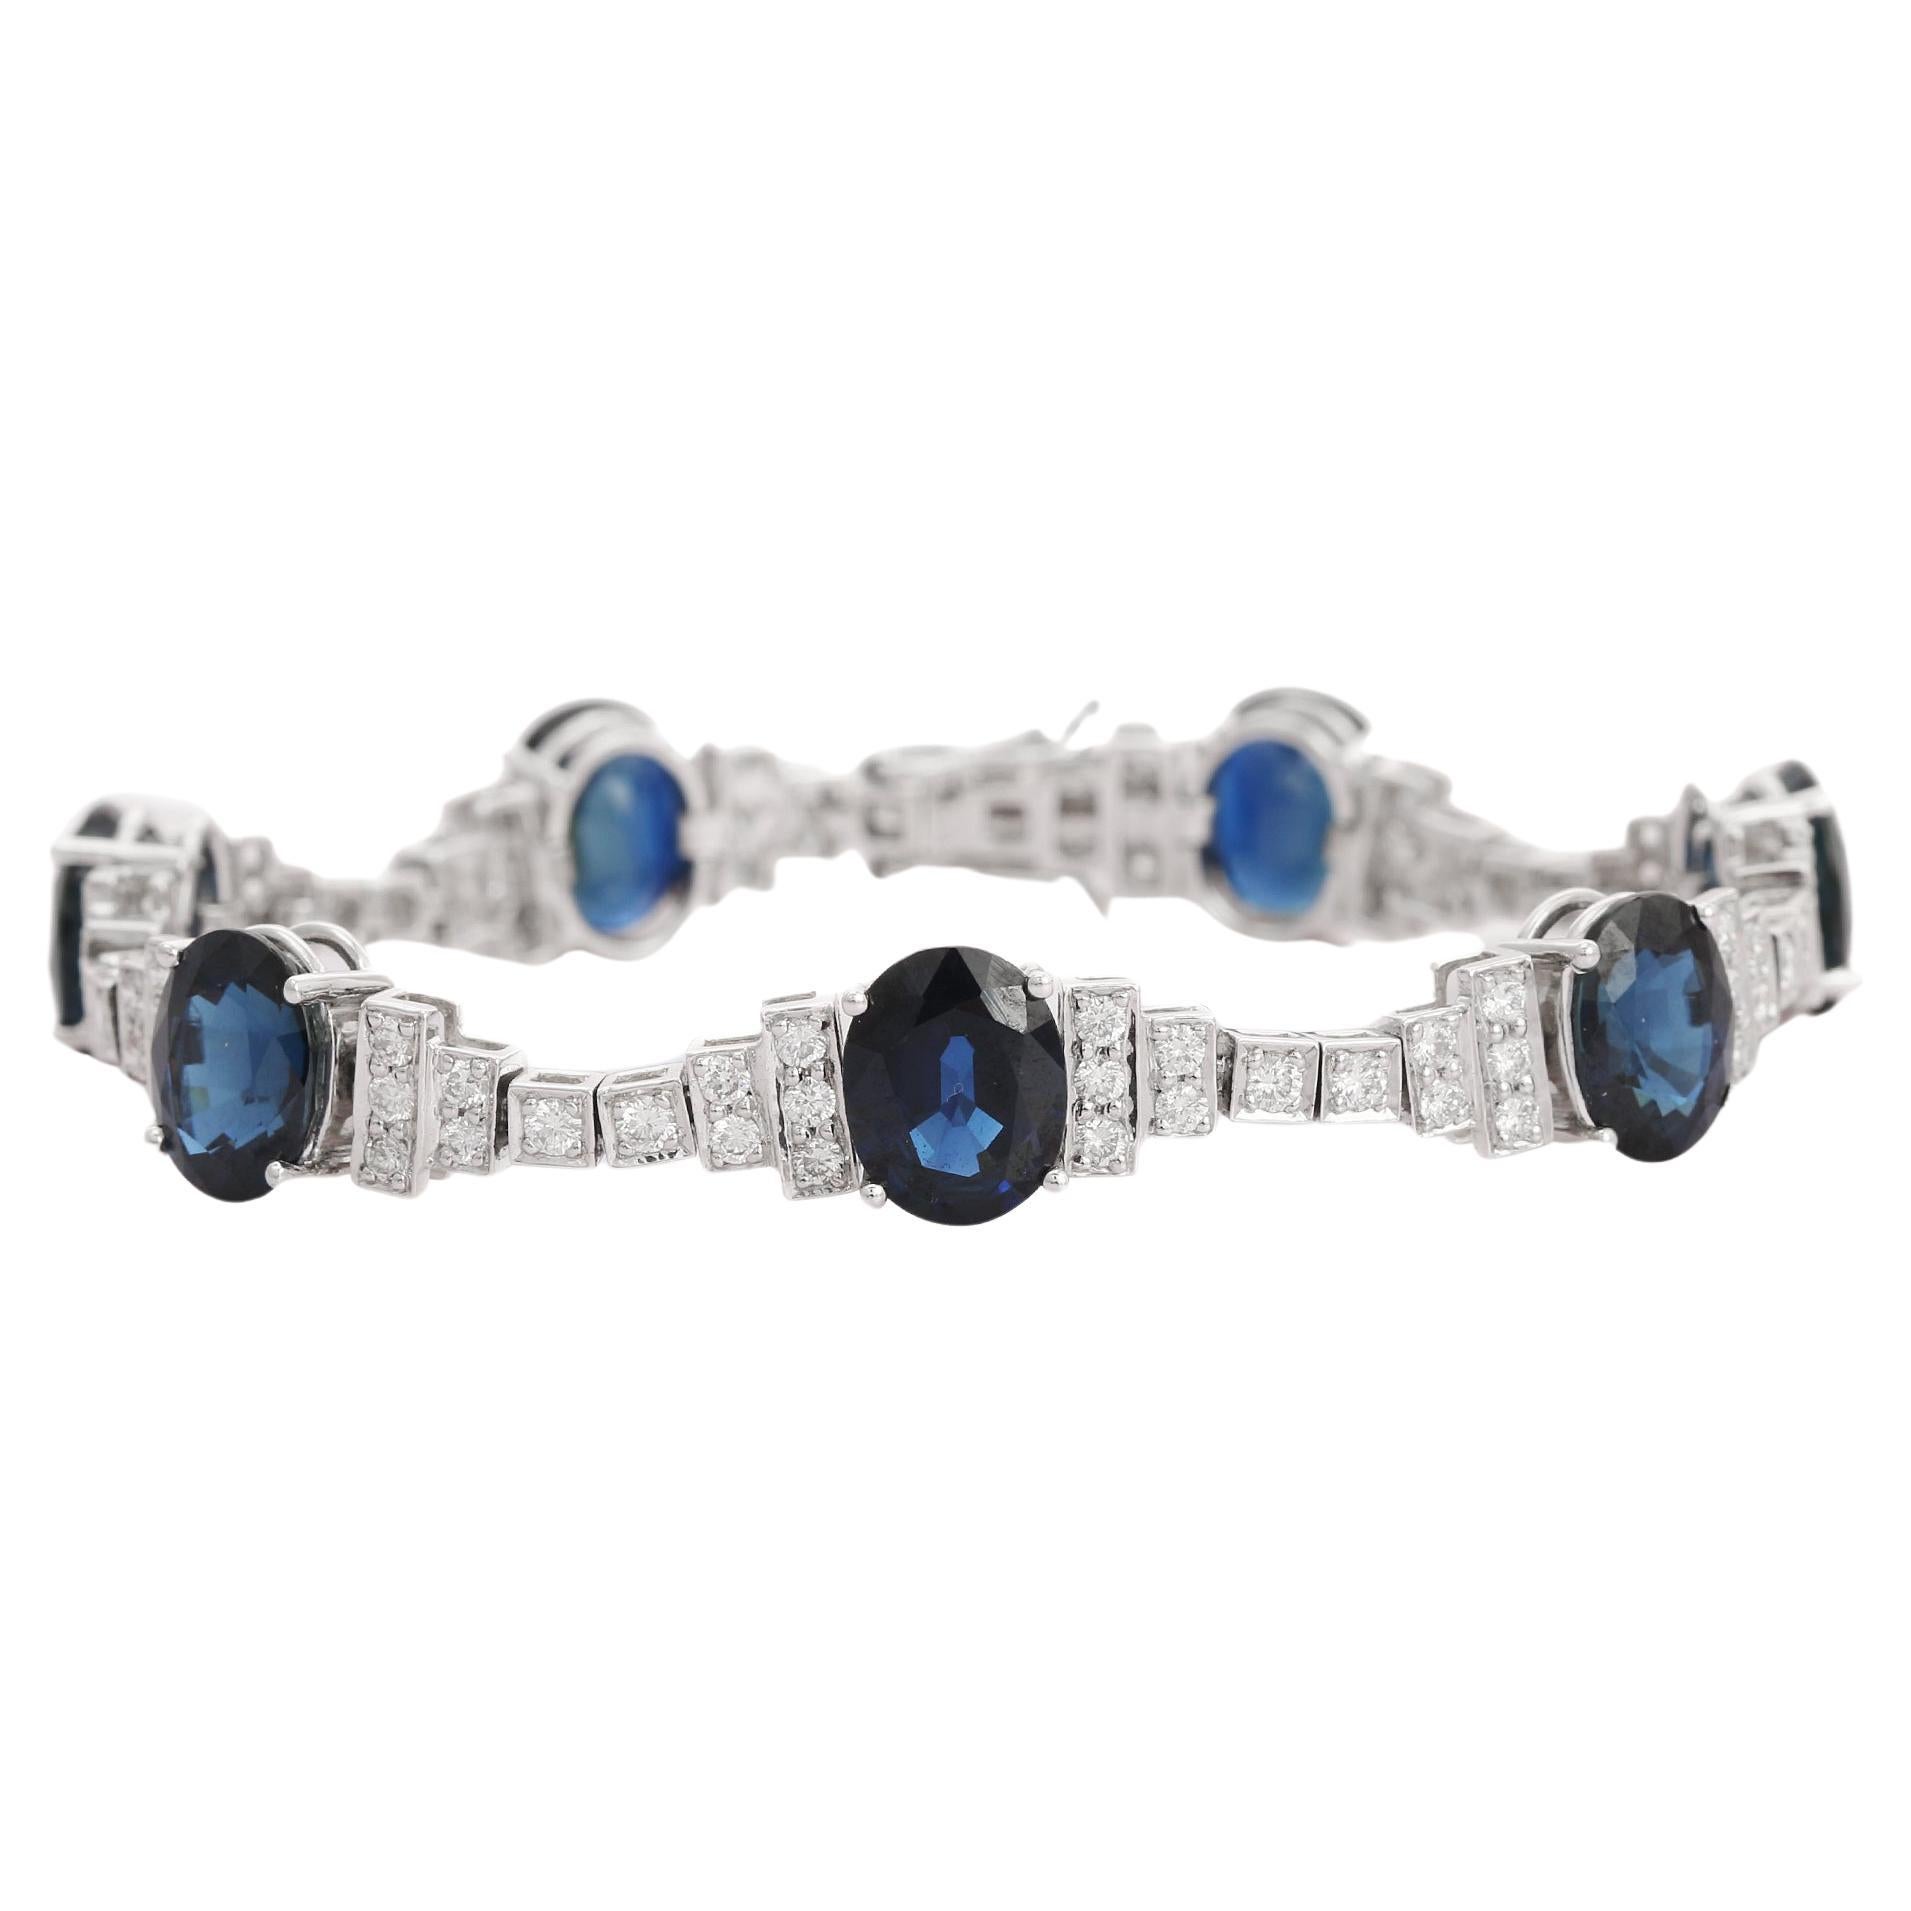 24 Carat Blue Sapphire Wedding Tennis Bracelet in 18K White Gold with Diamonds For Sale